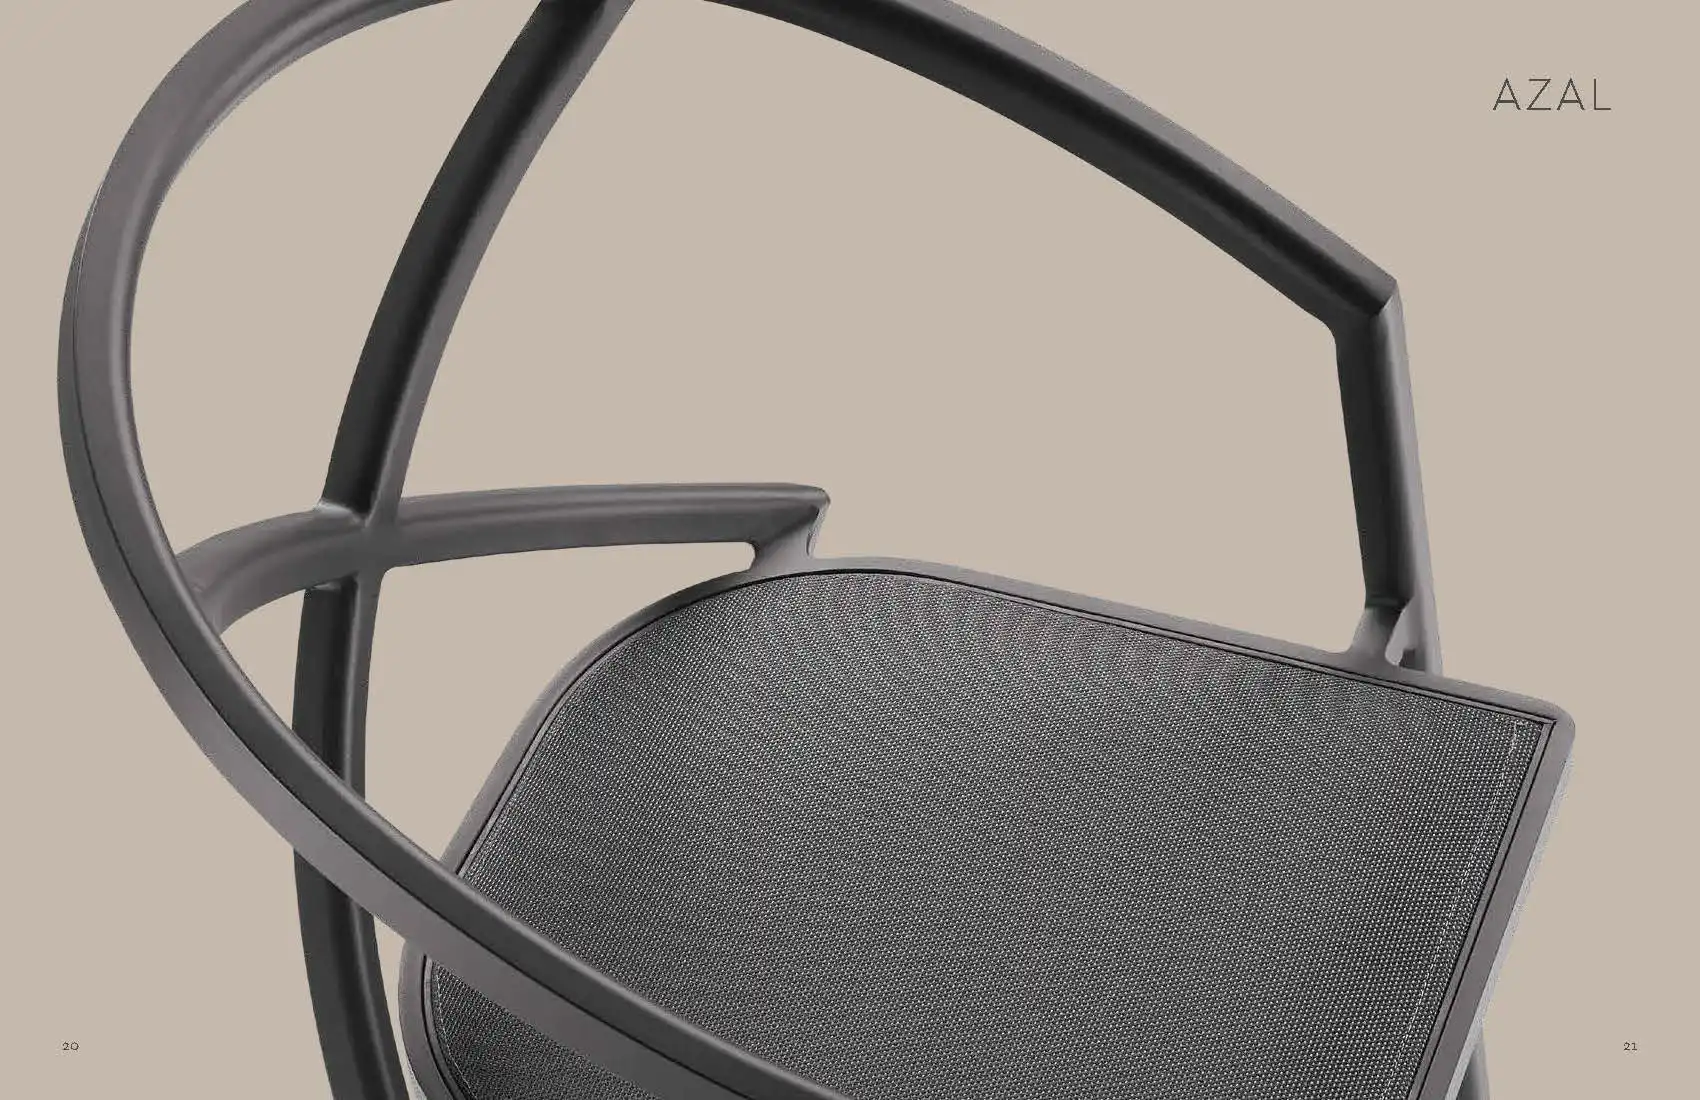 AZAL (New for 2021) Arm Chair by Oxford Garden